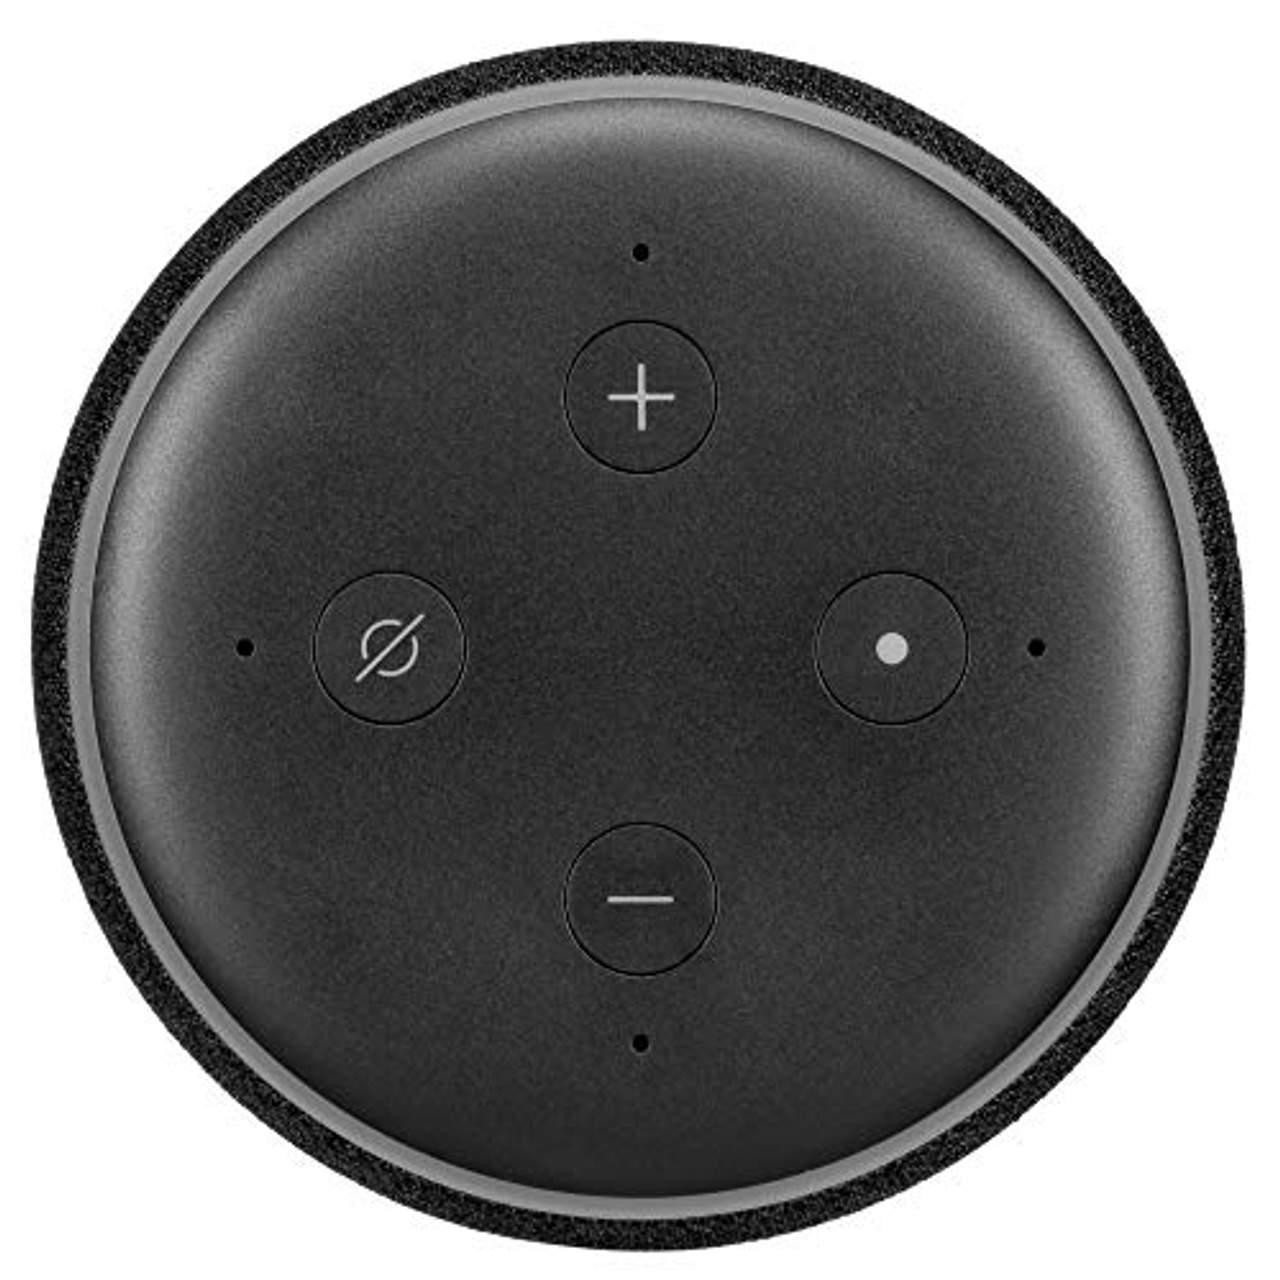 Amazon Echo Dot Intelligenter Lautsprecher